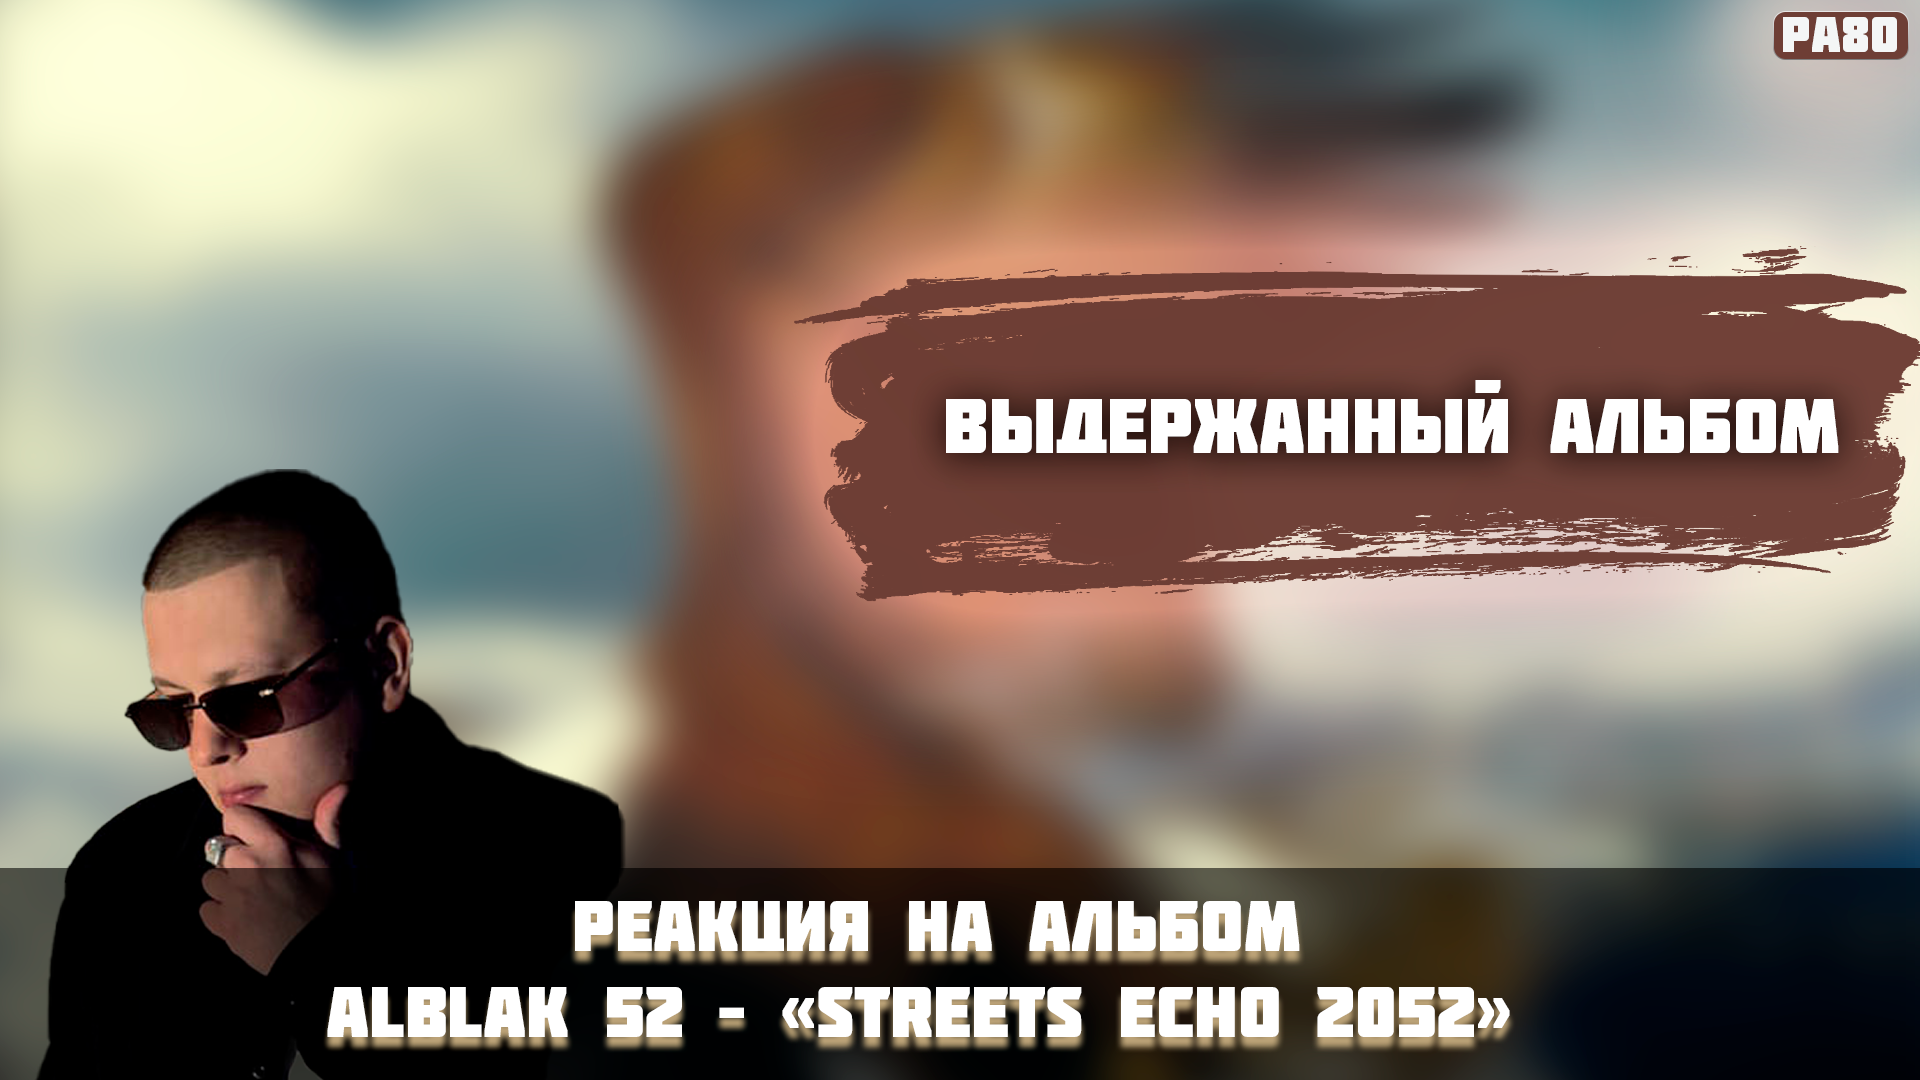 РЕАКЦИЯ НА АЛЬБОМ ALBLAK 52 - " STREETS ECHO 2052 "